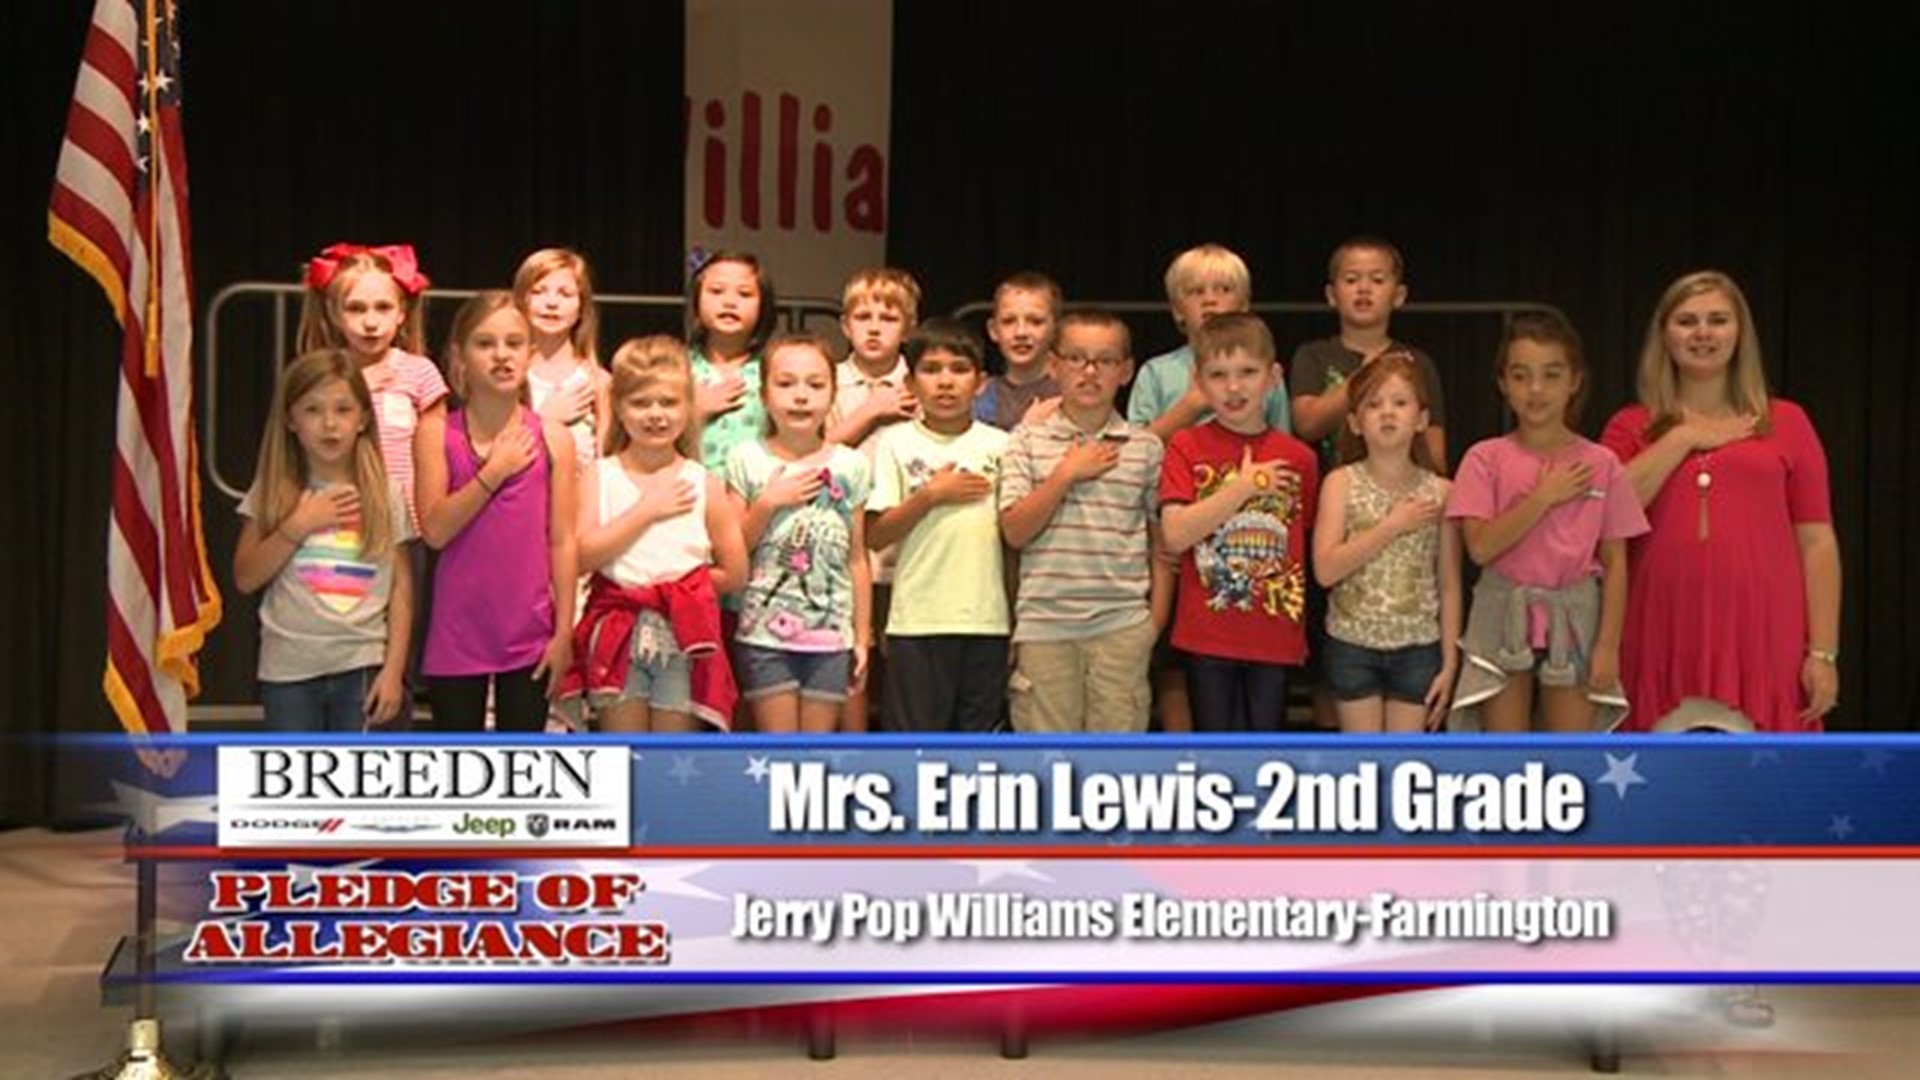 Mrs. Erin Lewis- 2nd Grade- Jerry Pop Williams Elementary- Farmington